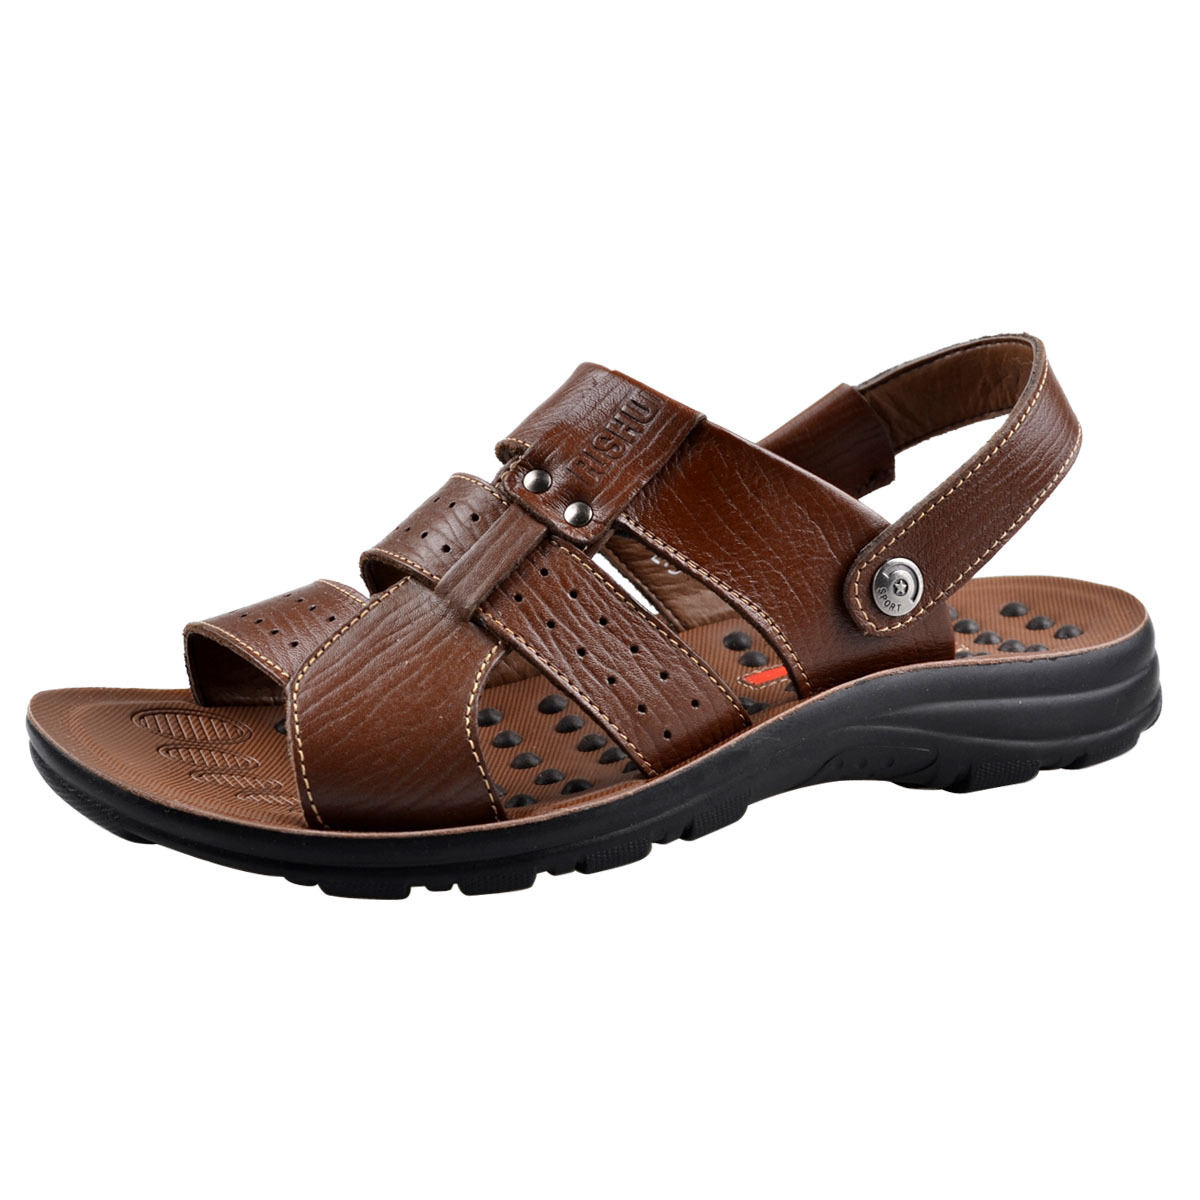 ... men's shoes counter genuine new massage men sandals soft leather